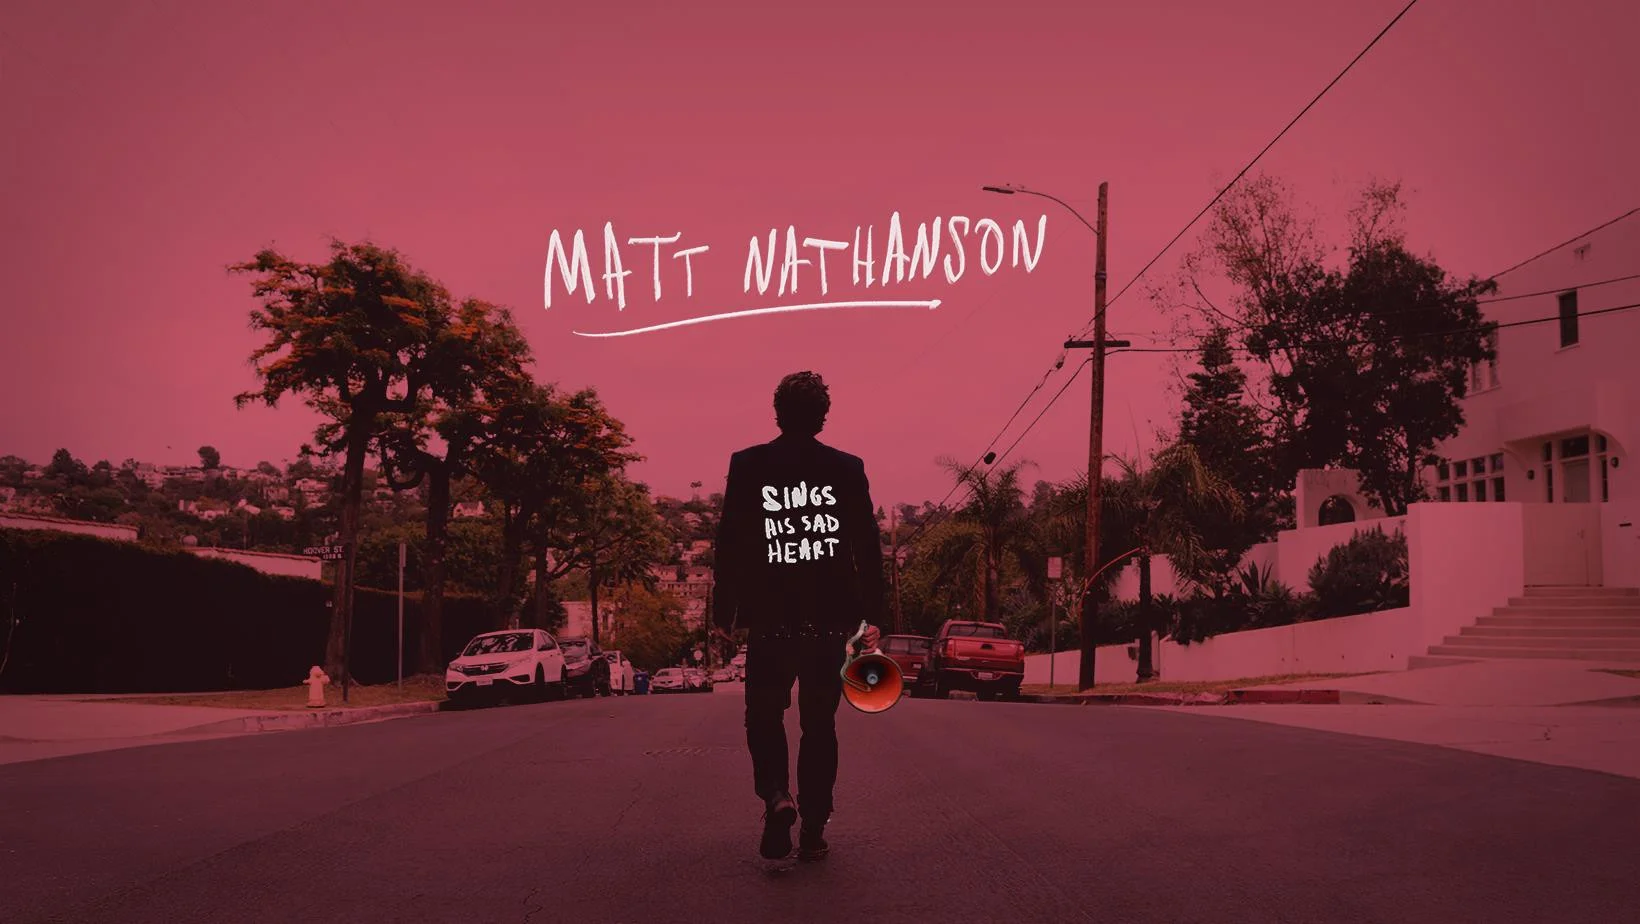 Matt Nathanson: Writing From the Heart